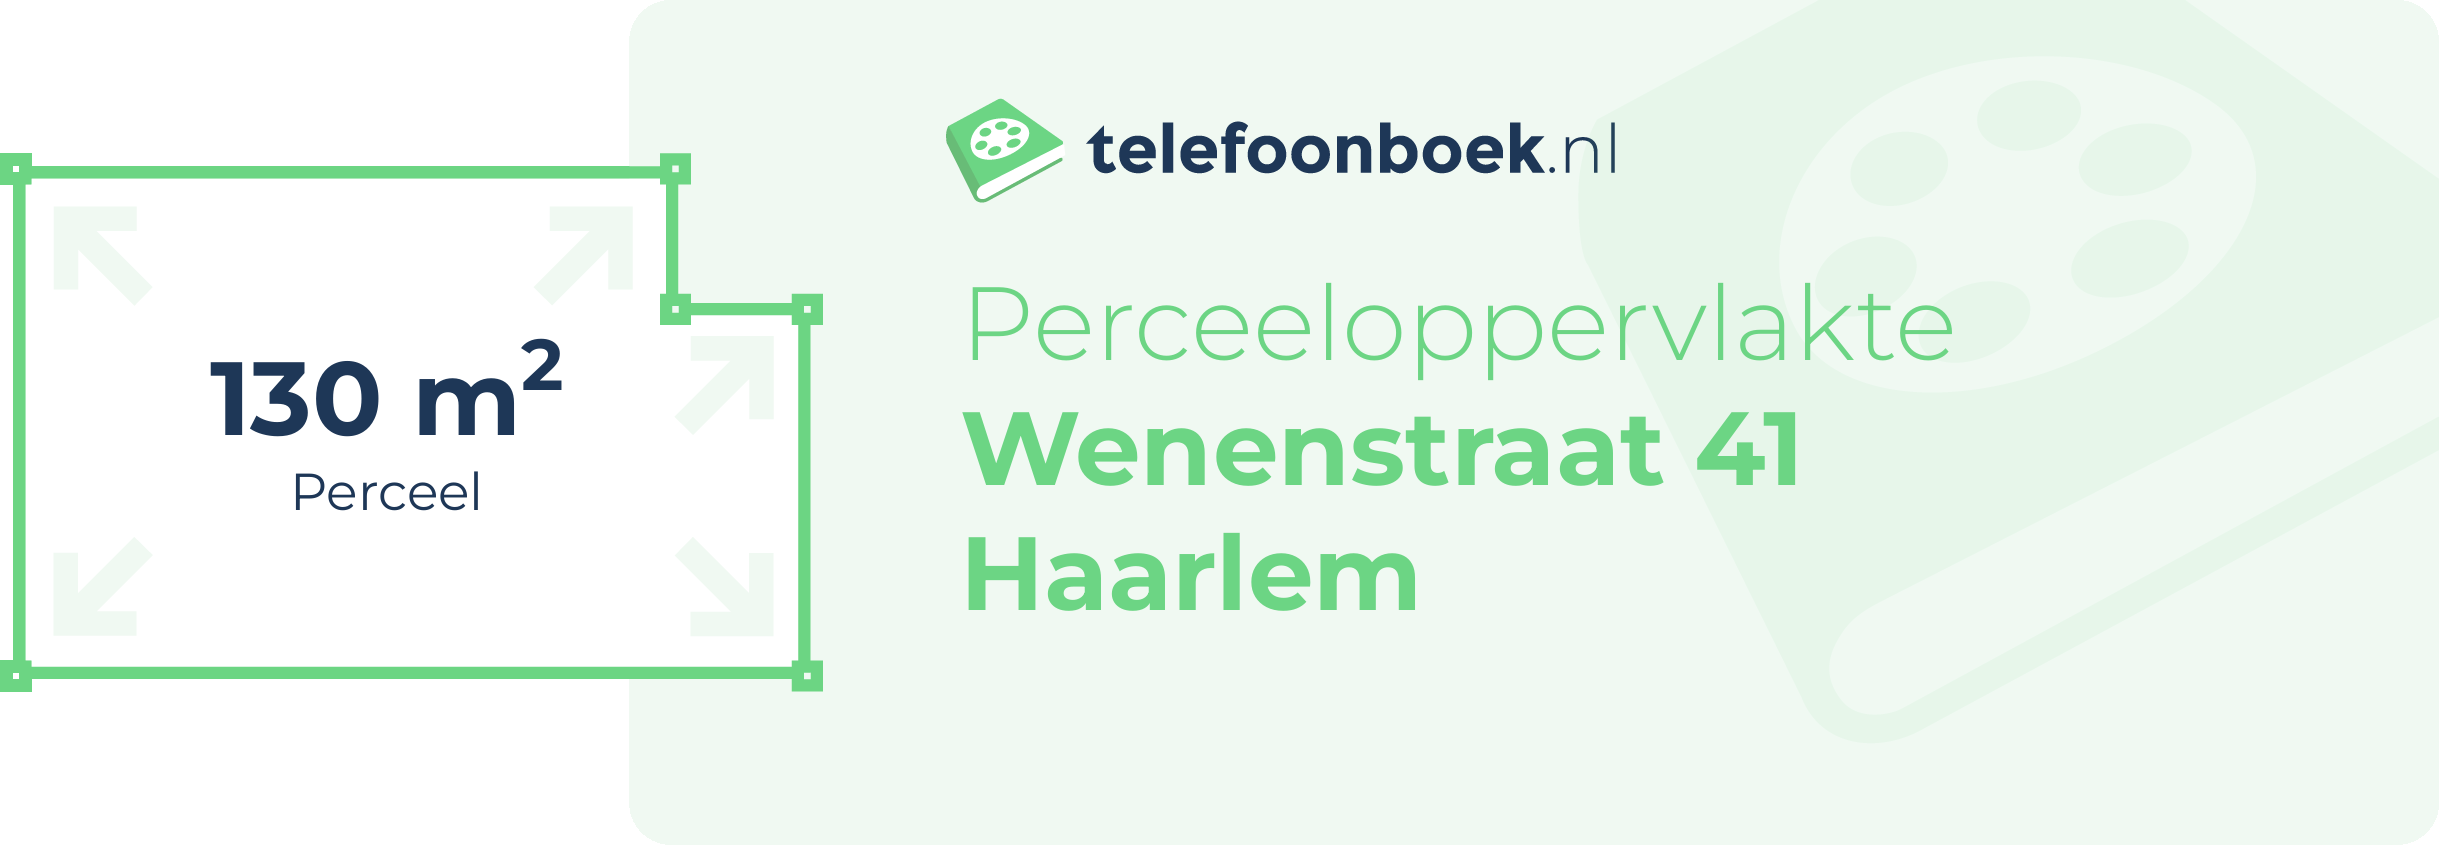 Perceeloppervlakte Wenenstraat 41 Haarlem